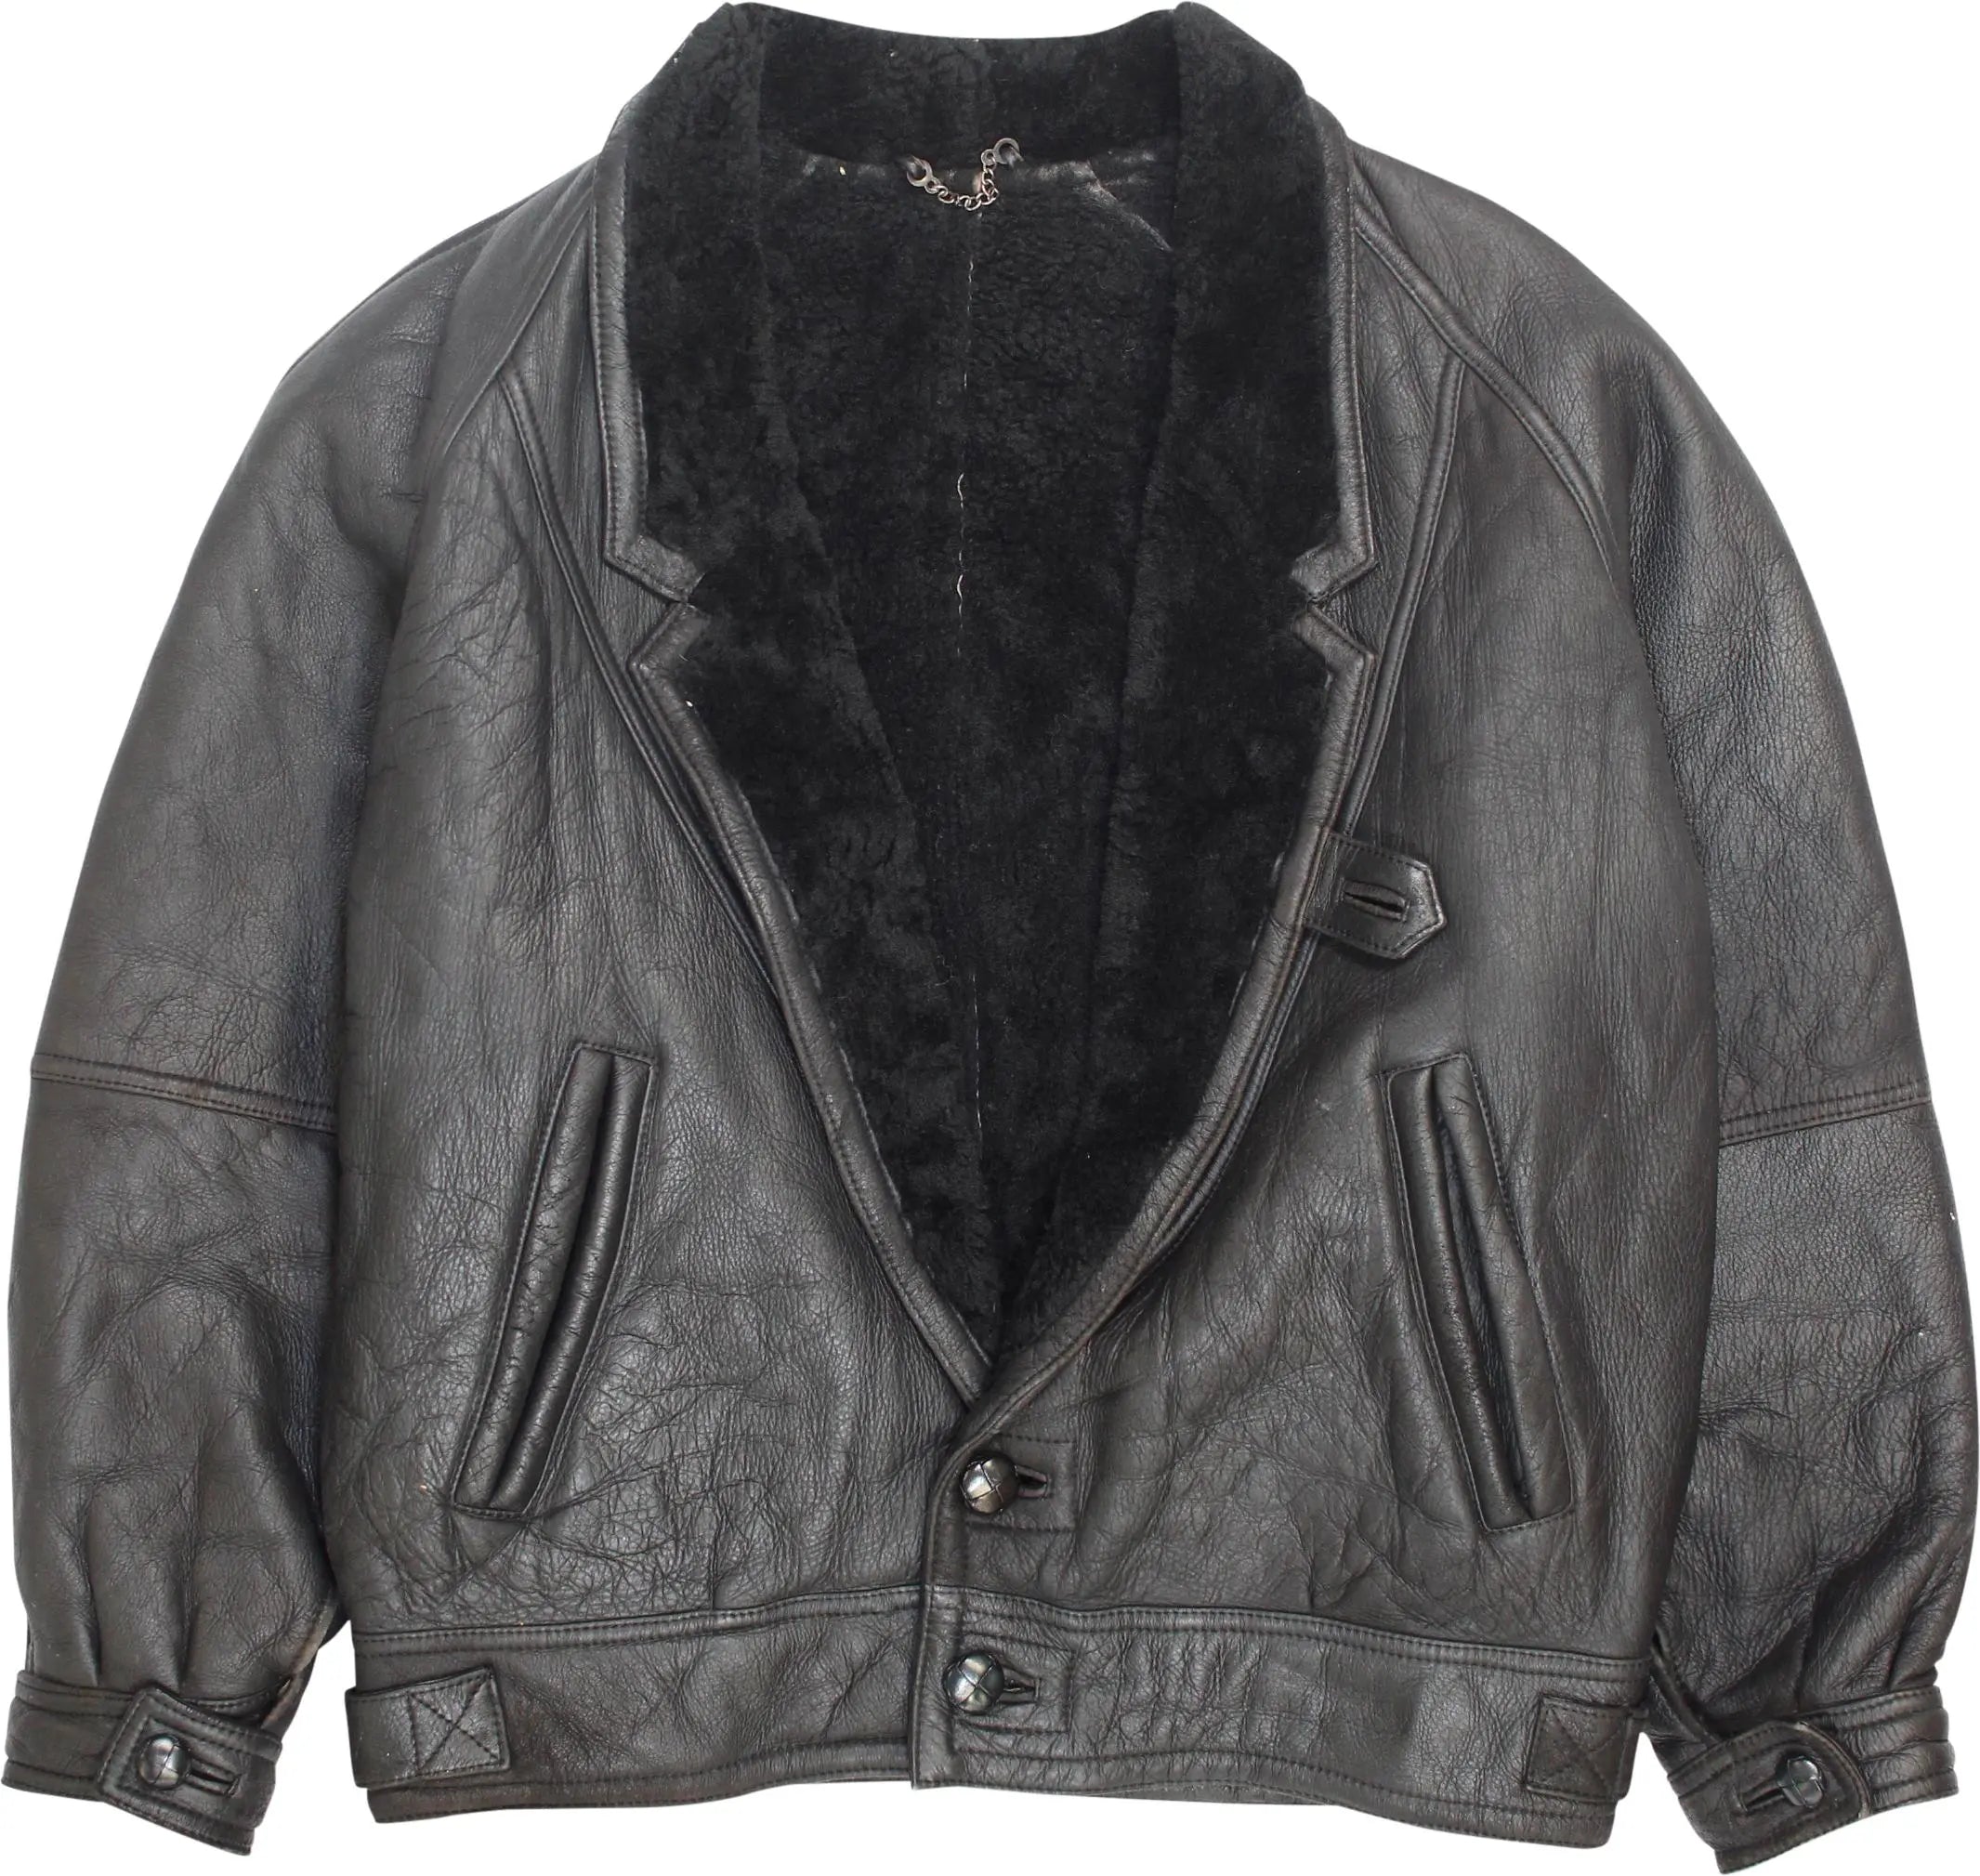 Conbipel - Black Leather Jacket- ThriftTale.com - Vintage and second handclothing